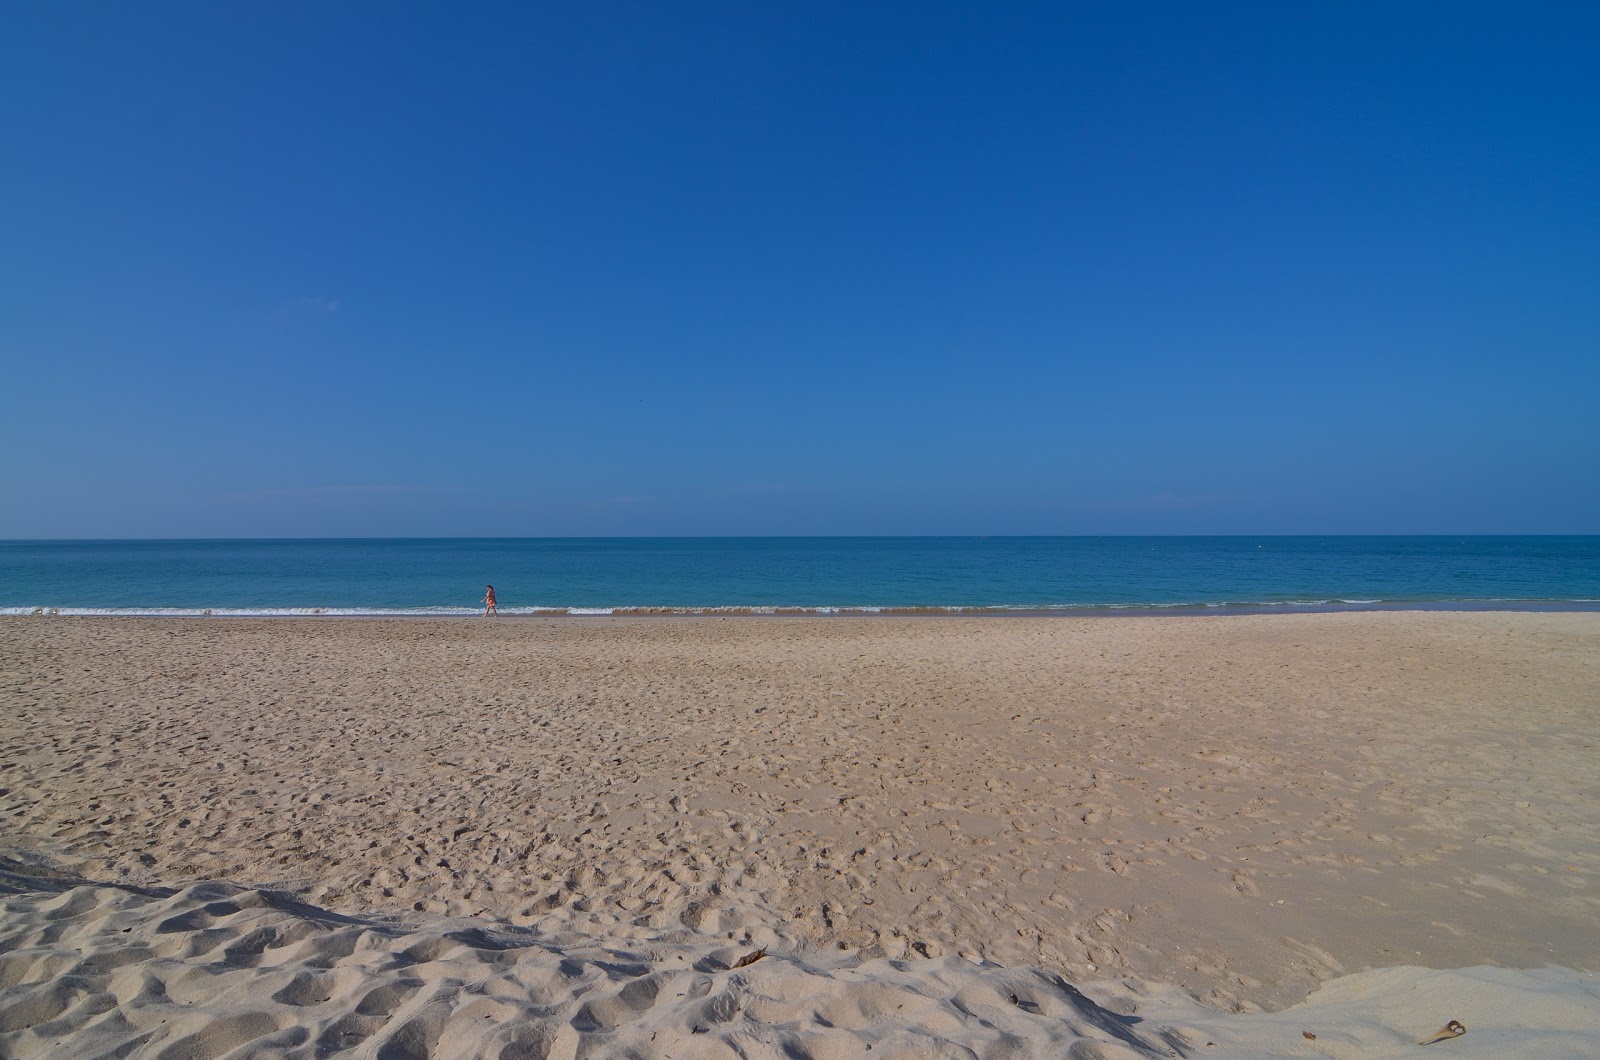 Fotografie cu Pra-Ae Beach - locul popular printre cunoscătorii de relaxare